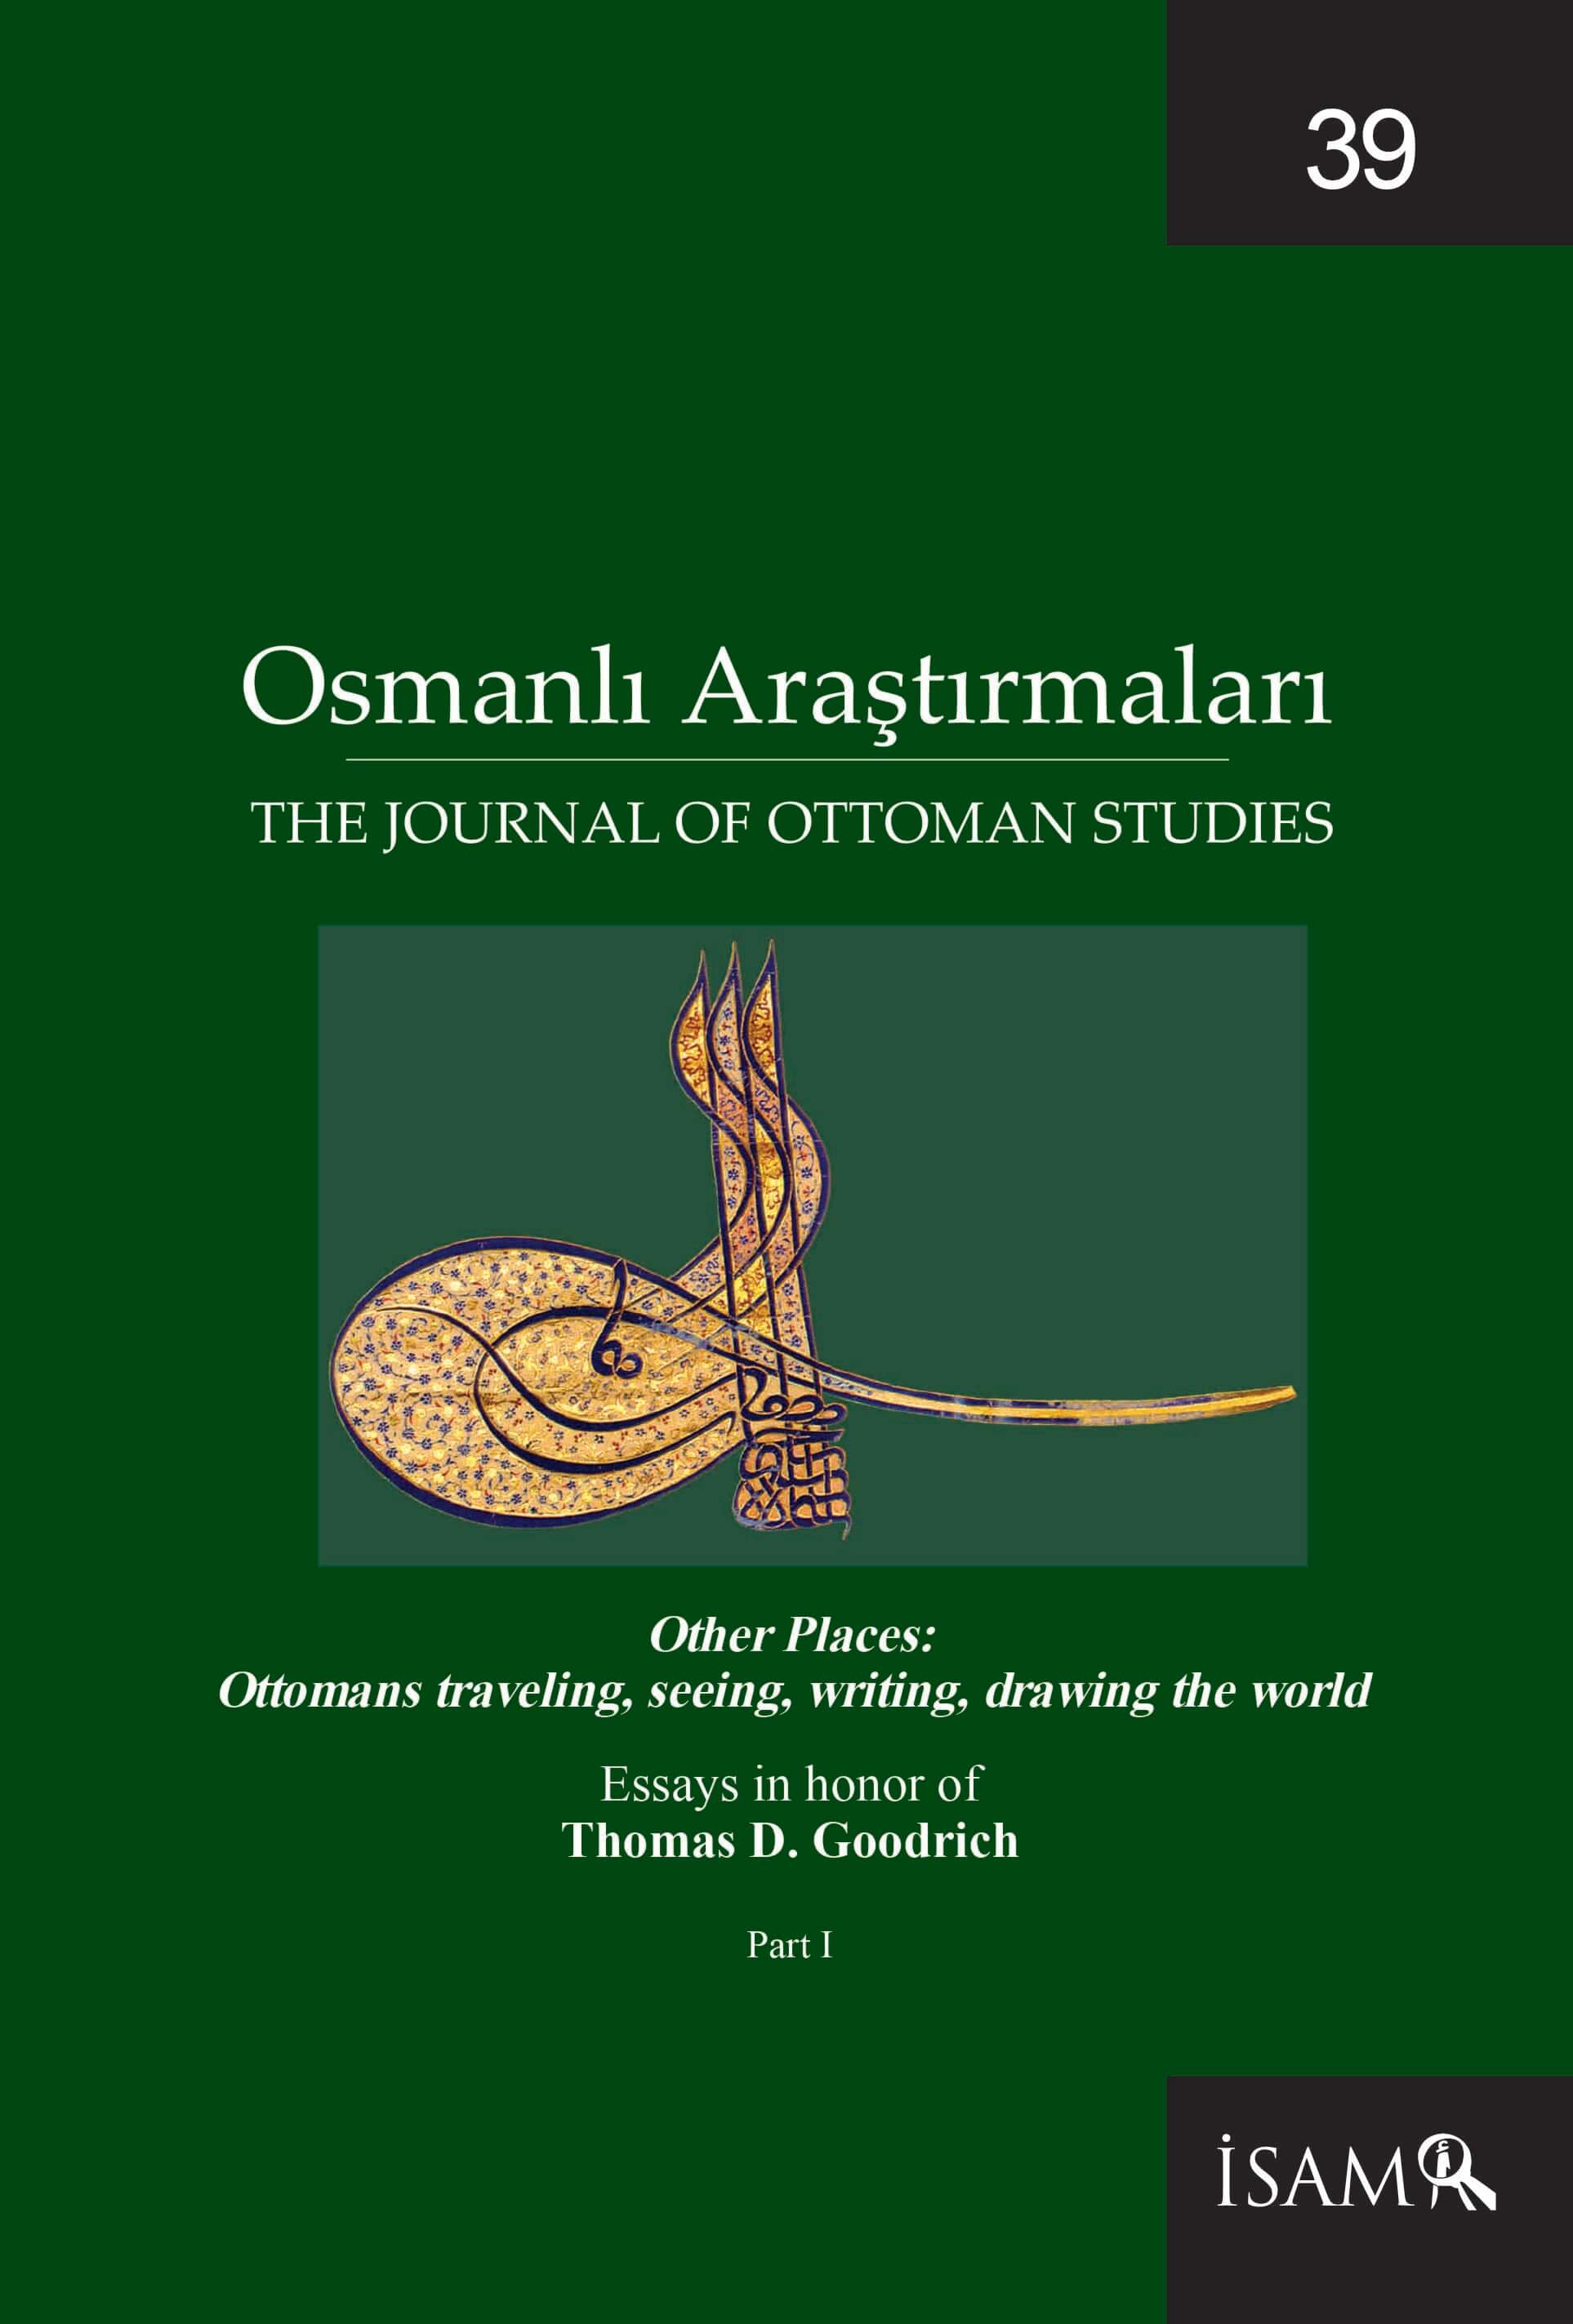 					Sayı 39 (2012): Osmanlı Araştırmaları (Thomas D. Goodrich Armağanı II, A special double issue [39-40]) Gör
				